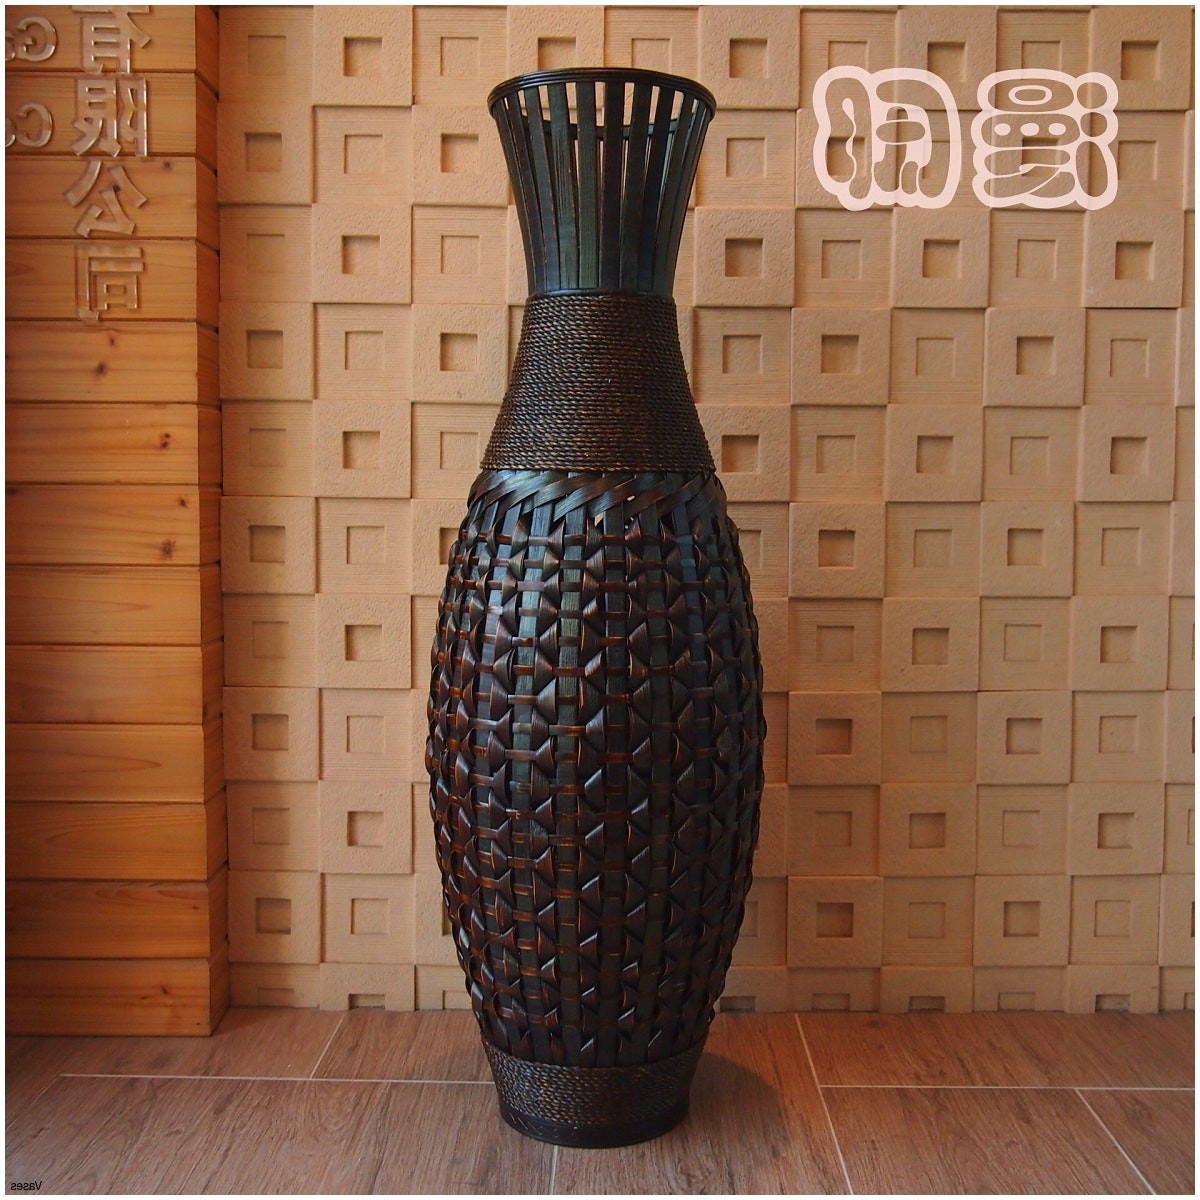 bamboo vases for sale of 21 beau decorative vases anciendemutu org with mesmerizing wicker floor vase 107 vases uk cheap saleh sale fulli 0d